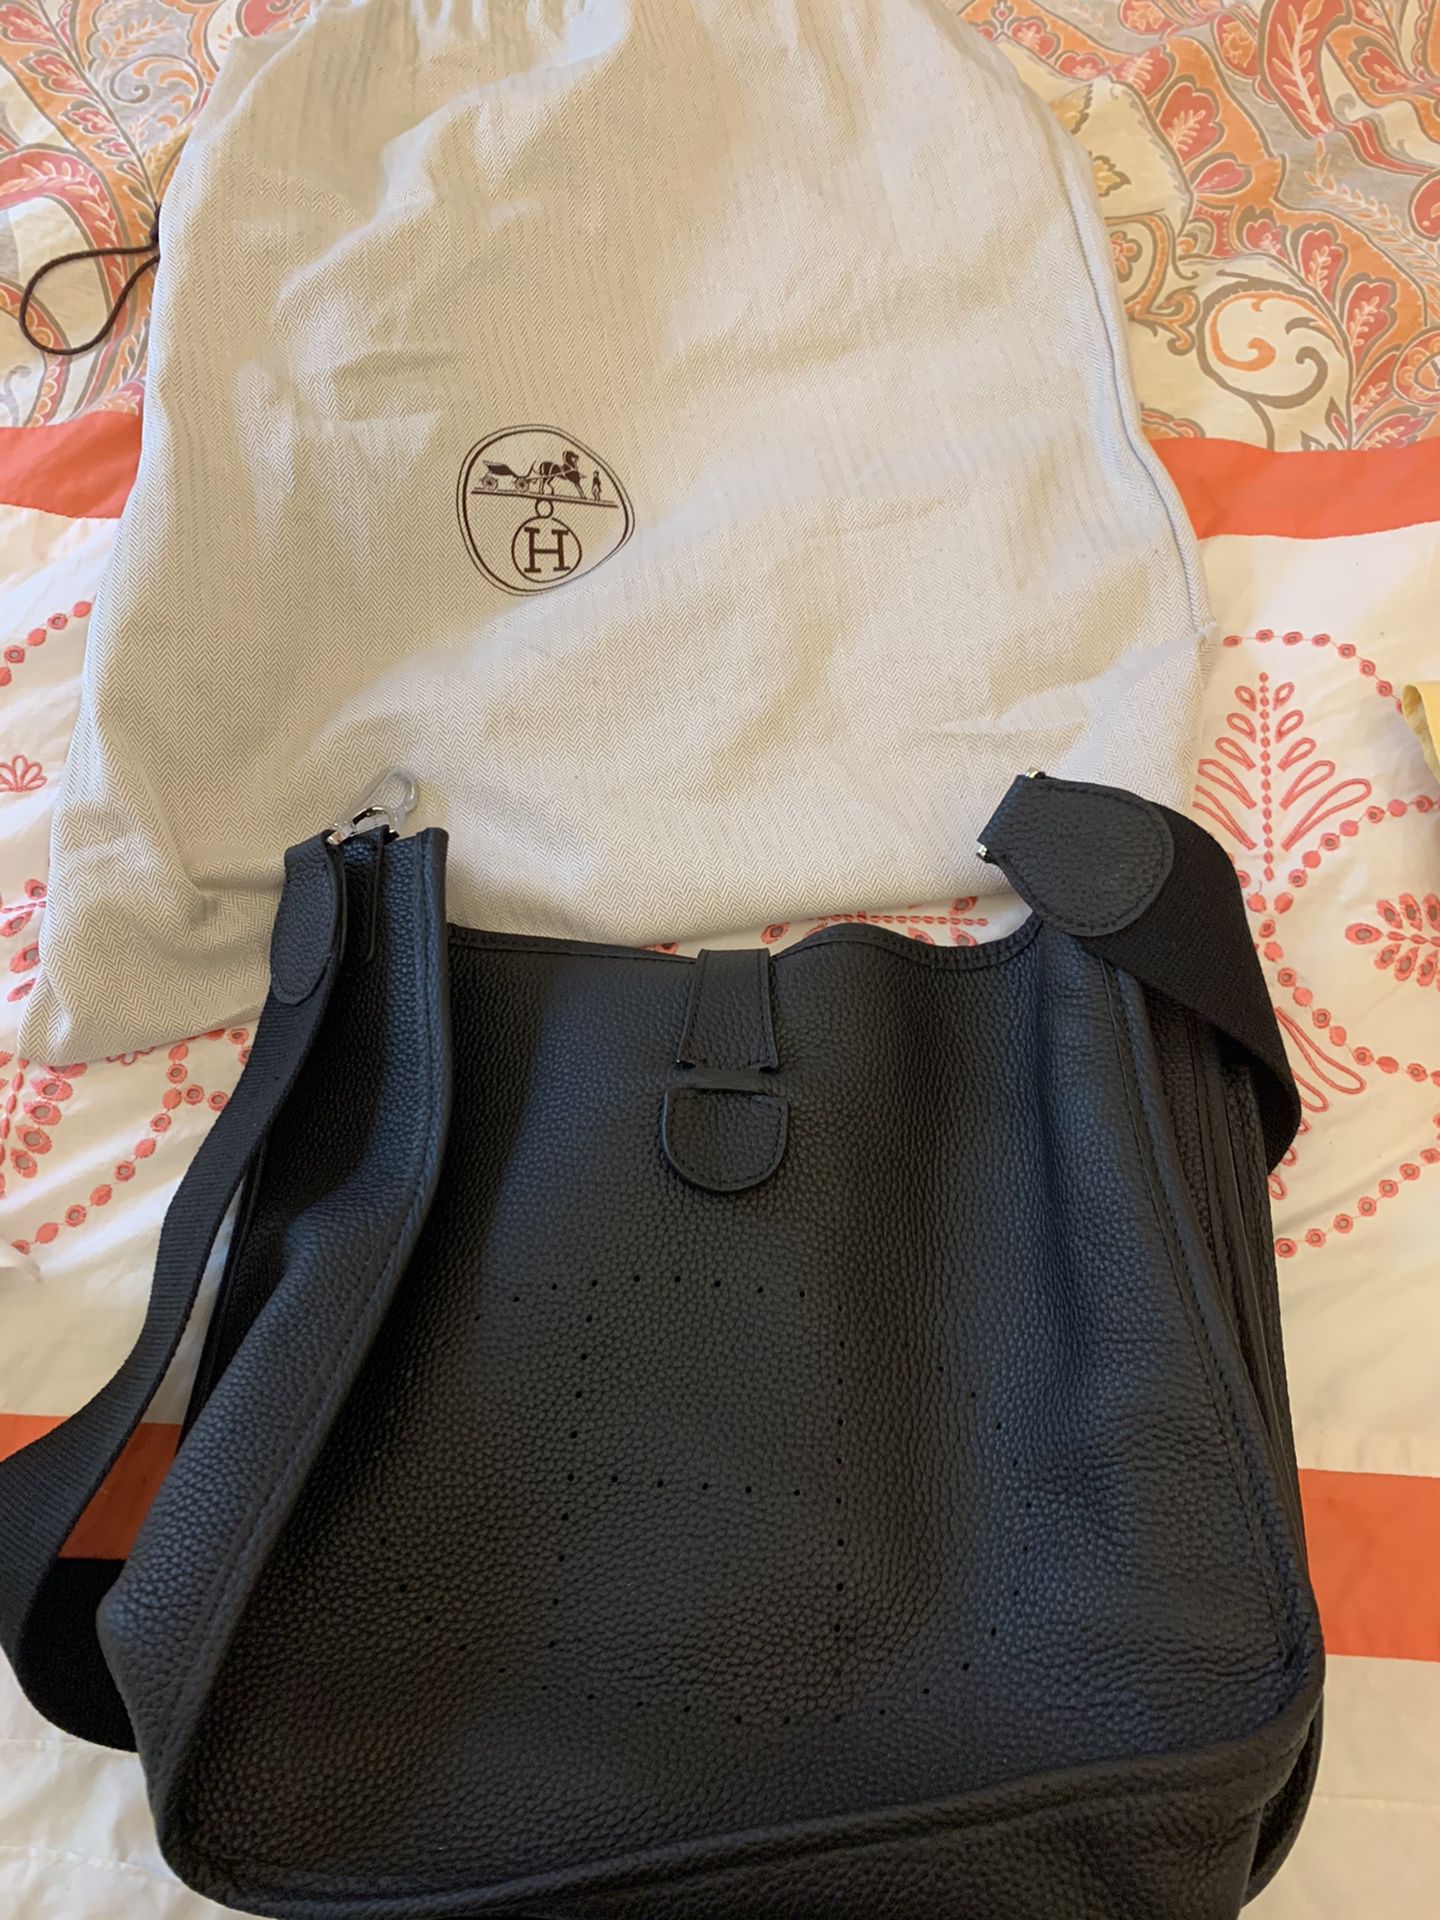 Hermes cross-bag handbag